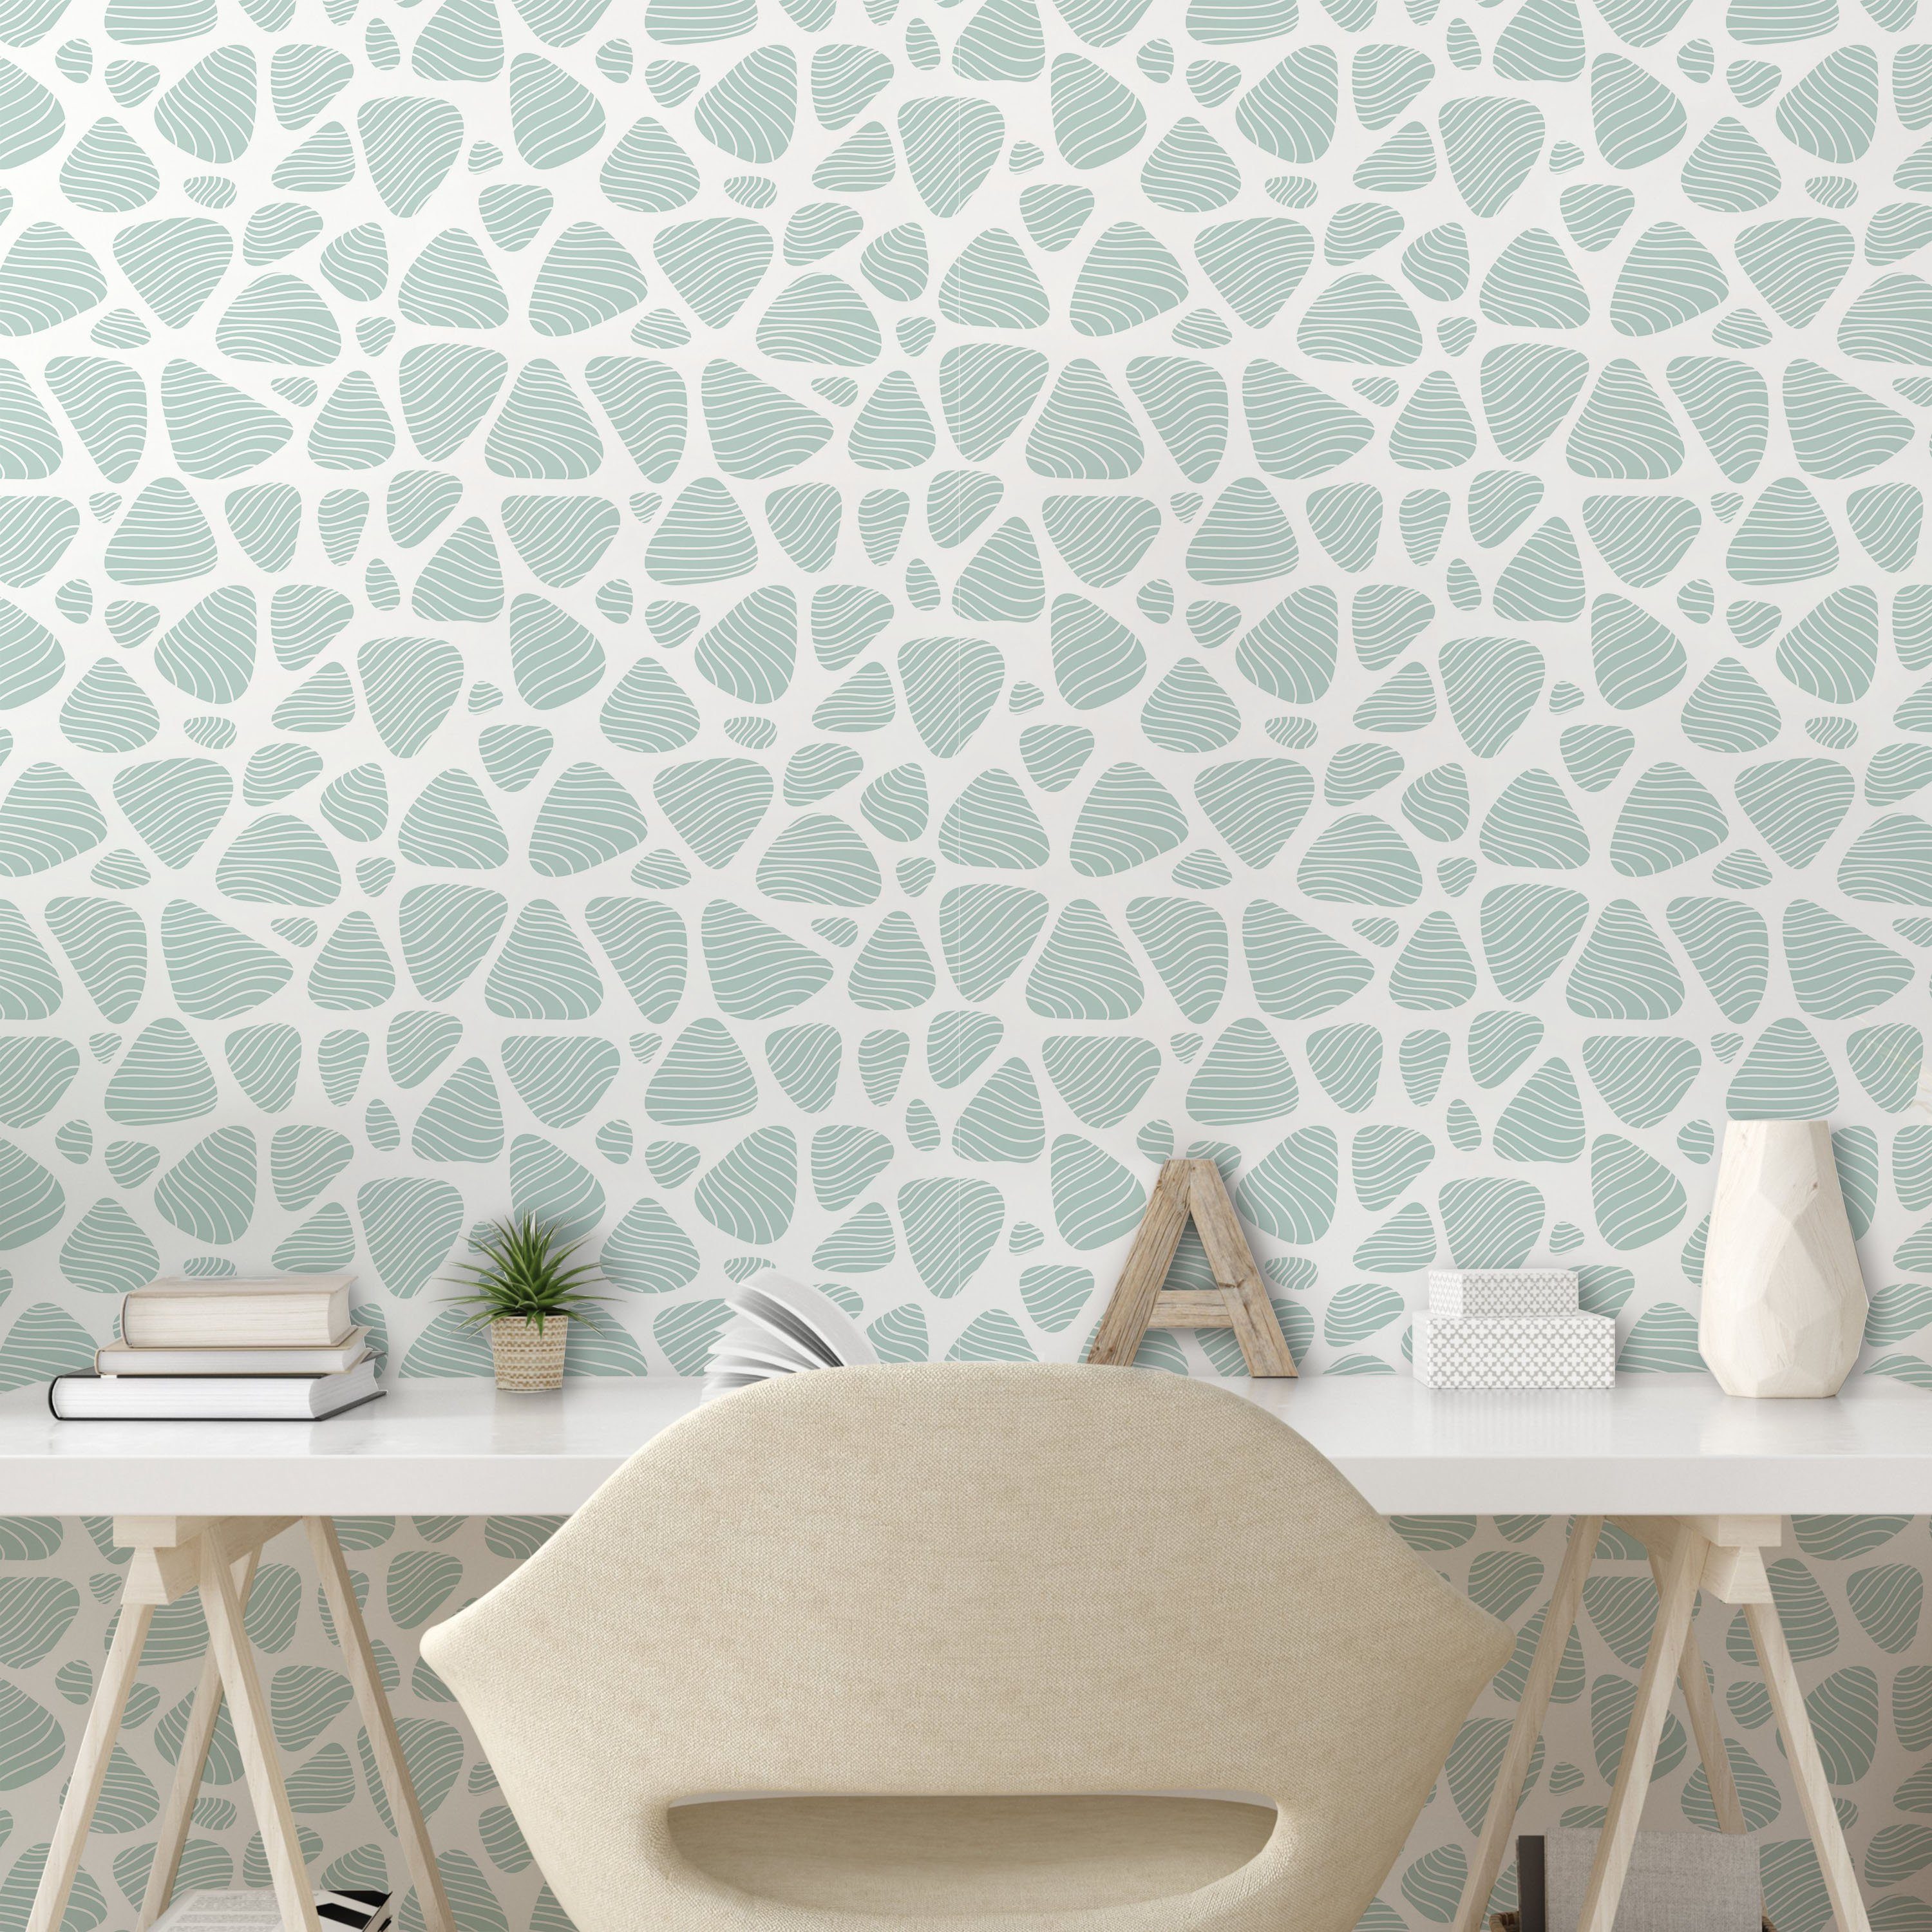 Abakuhaus Vinyltapete selbstklebendes Wohnzimmer Küchenakzent, Shapes Farbe Wie Pebble neutrale